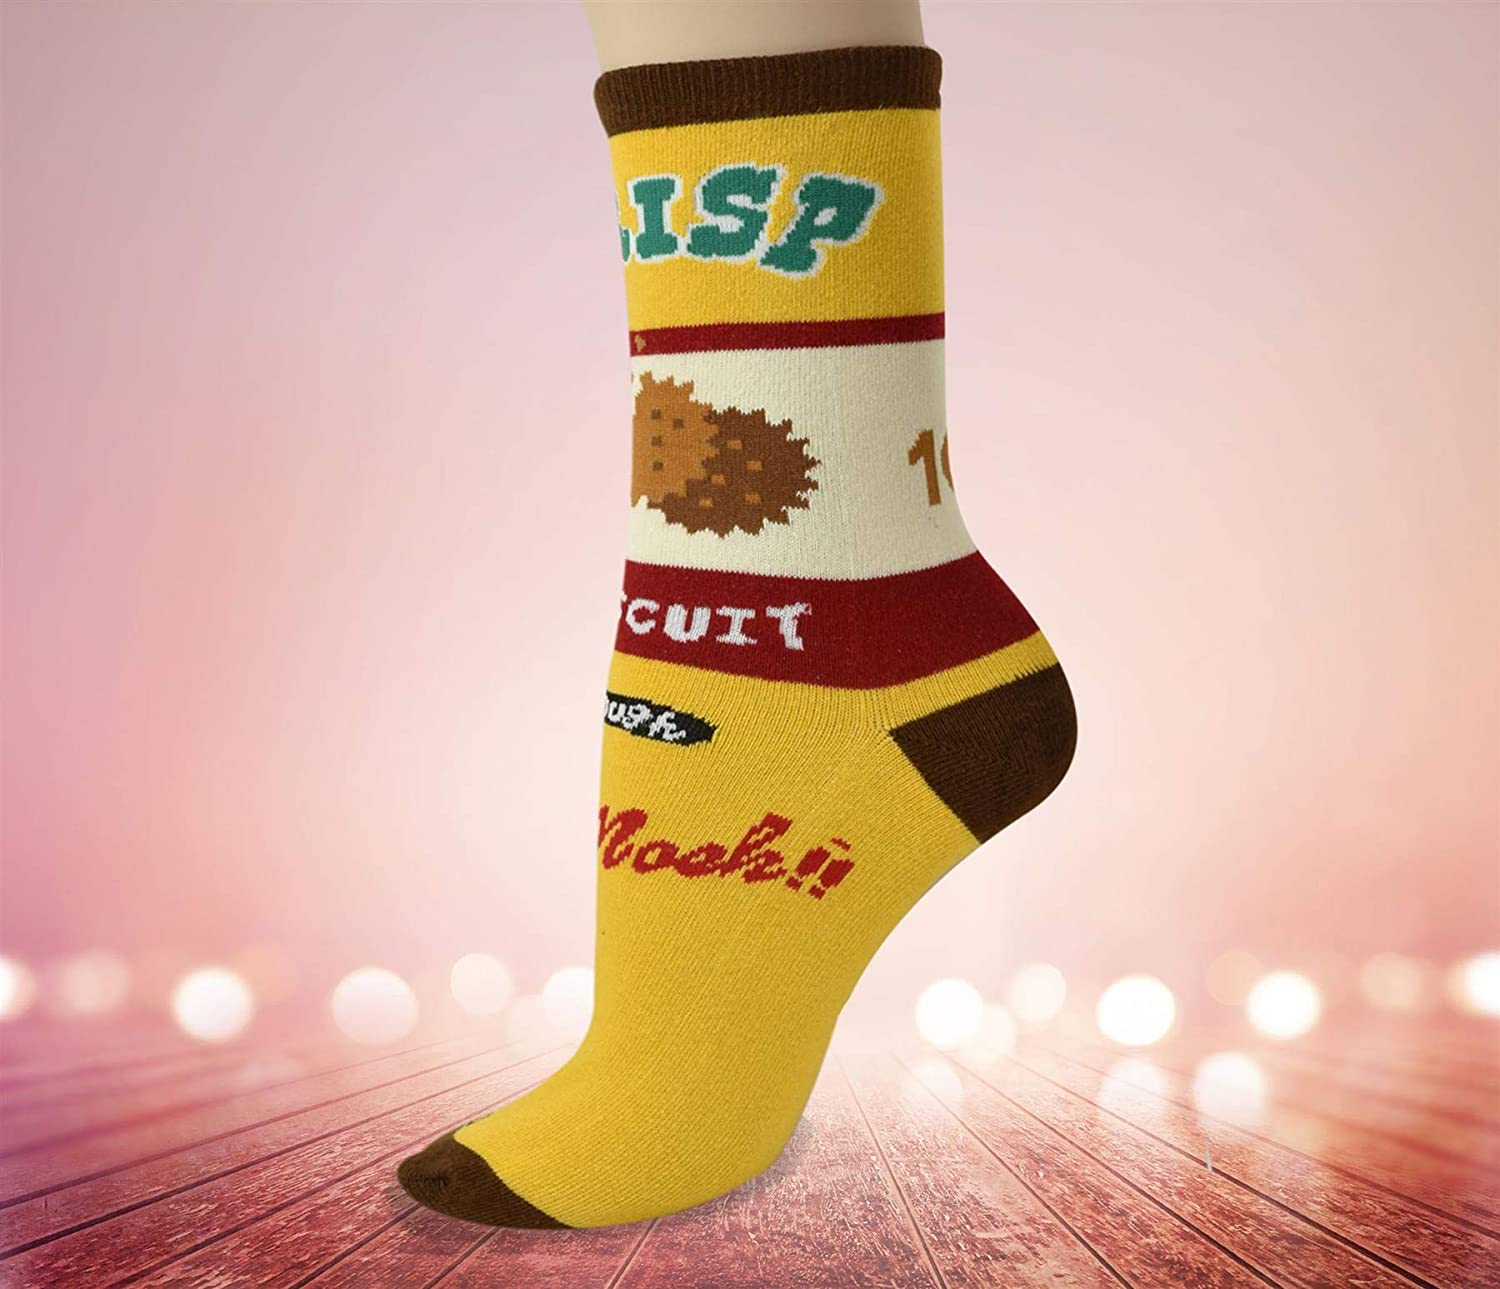 Biscuit Crunch Men's Socks (Size 8-12)